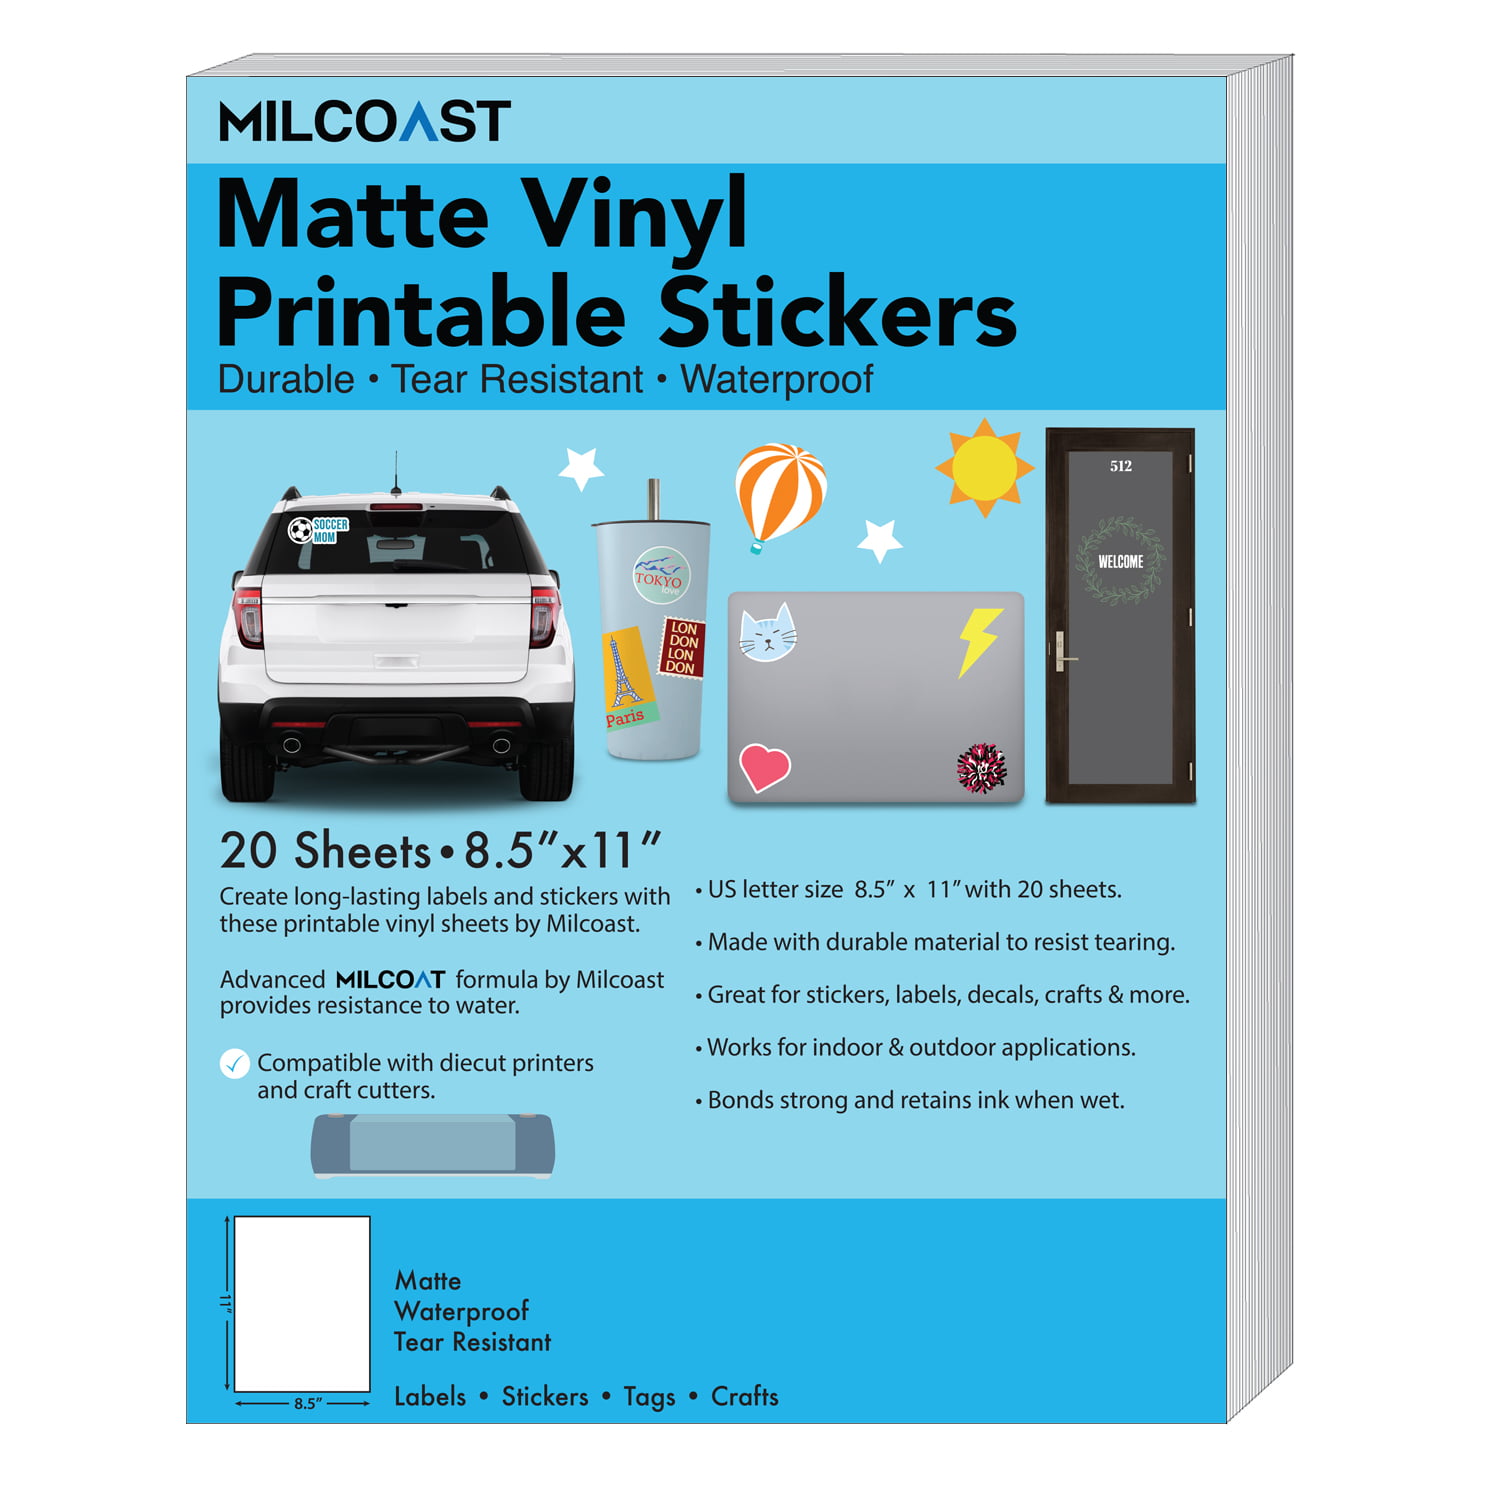 clear vinyl printer paper for inklet printer